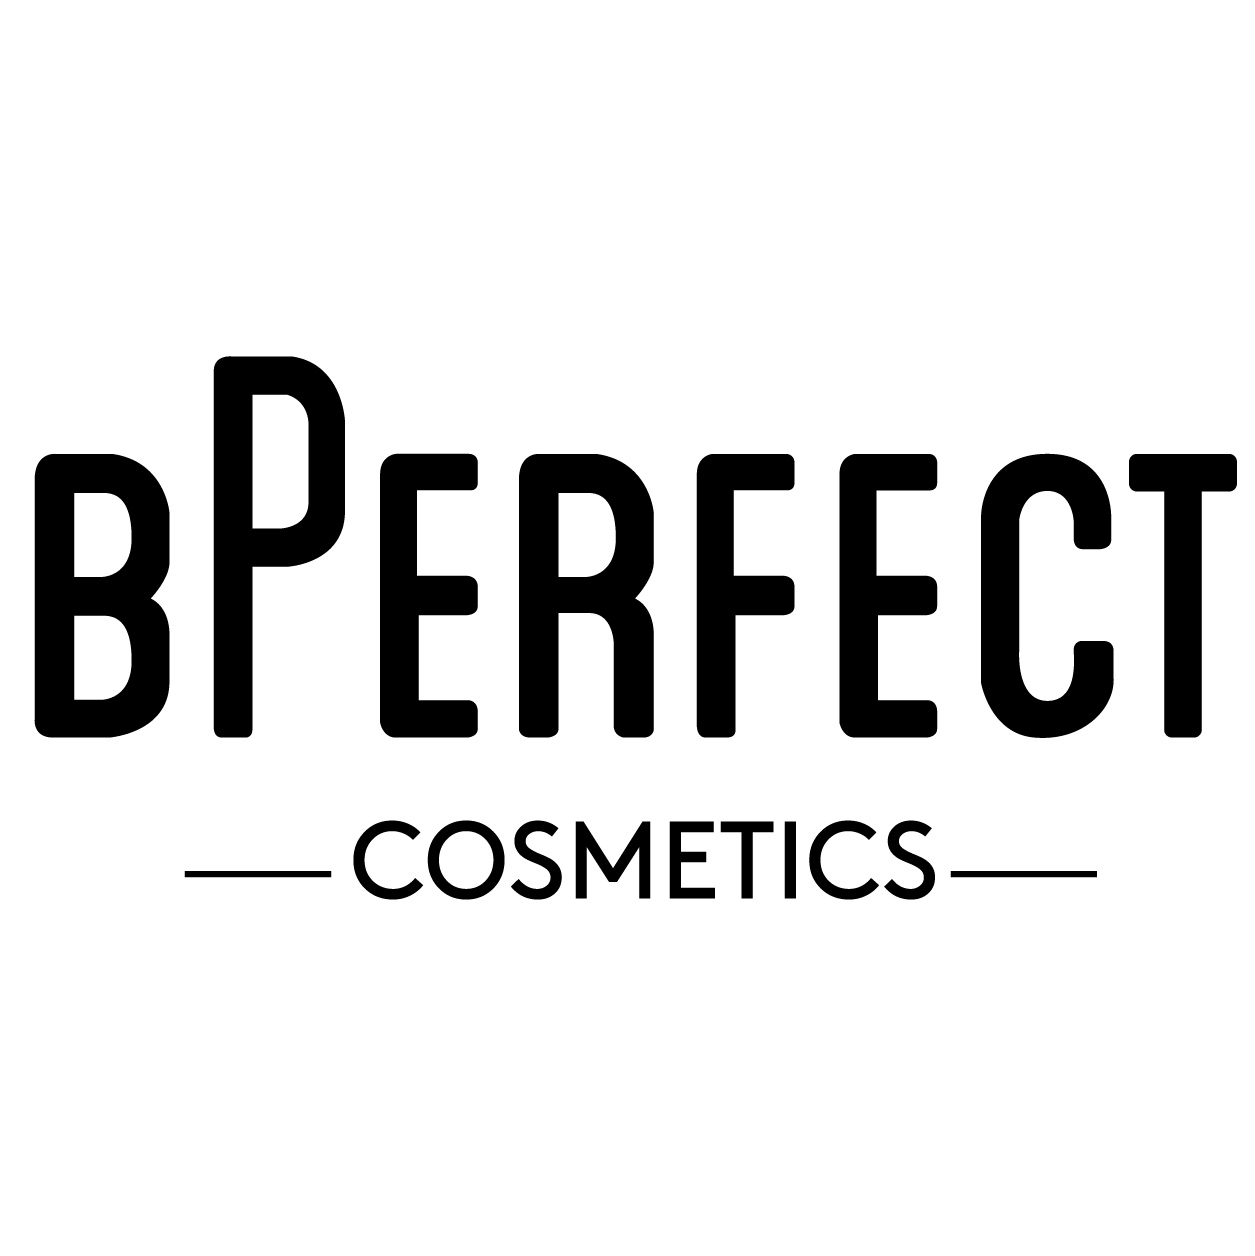 B Perfect Cosmetics